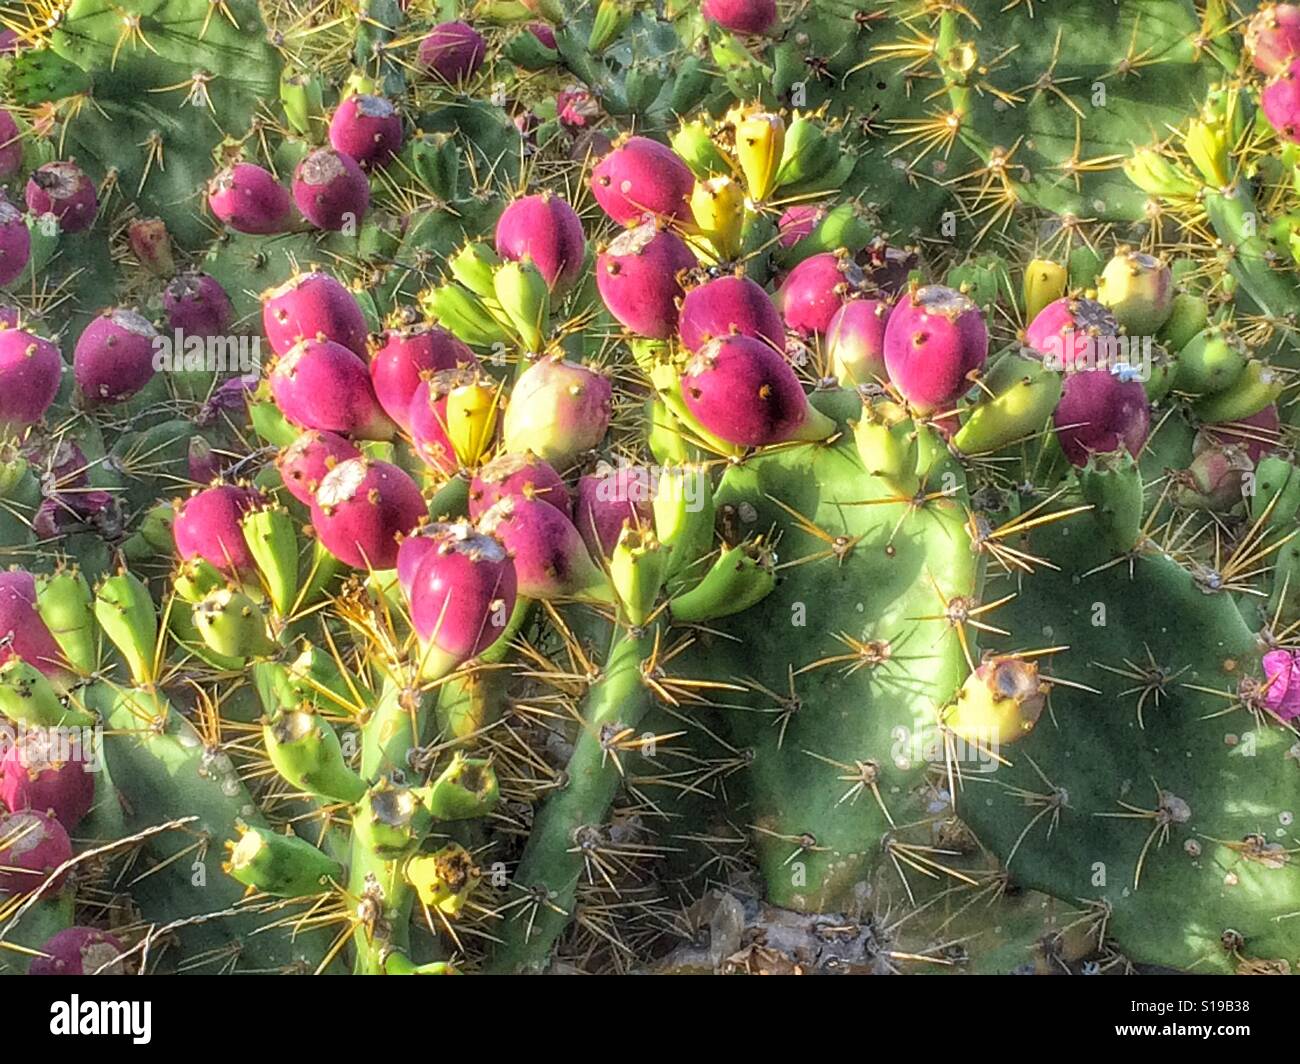 opuntia dillenii cactus with eatable fruits Stock Photo